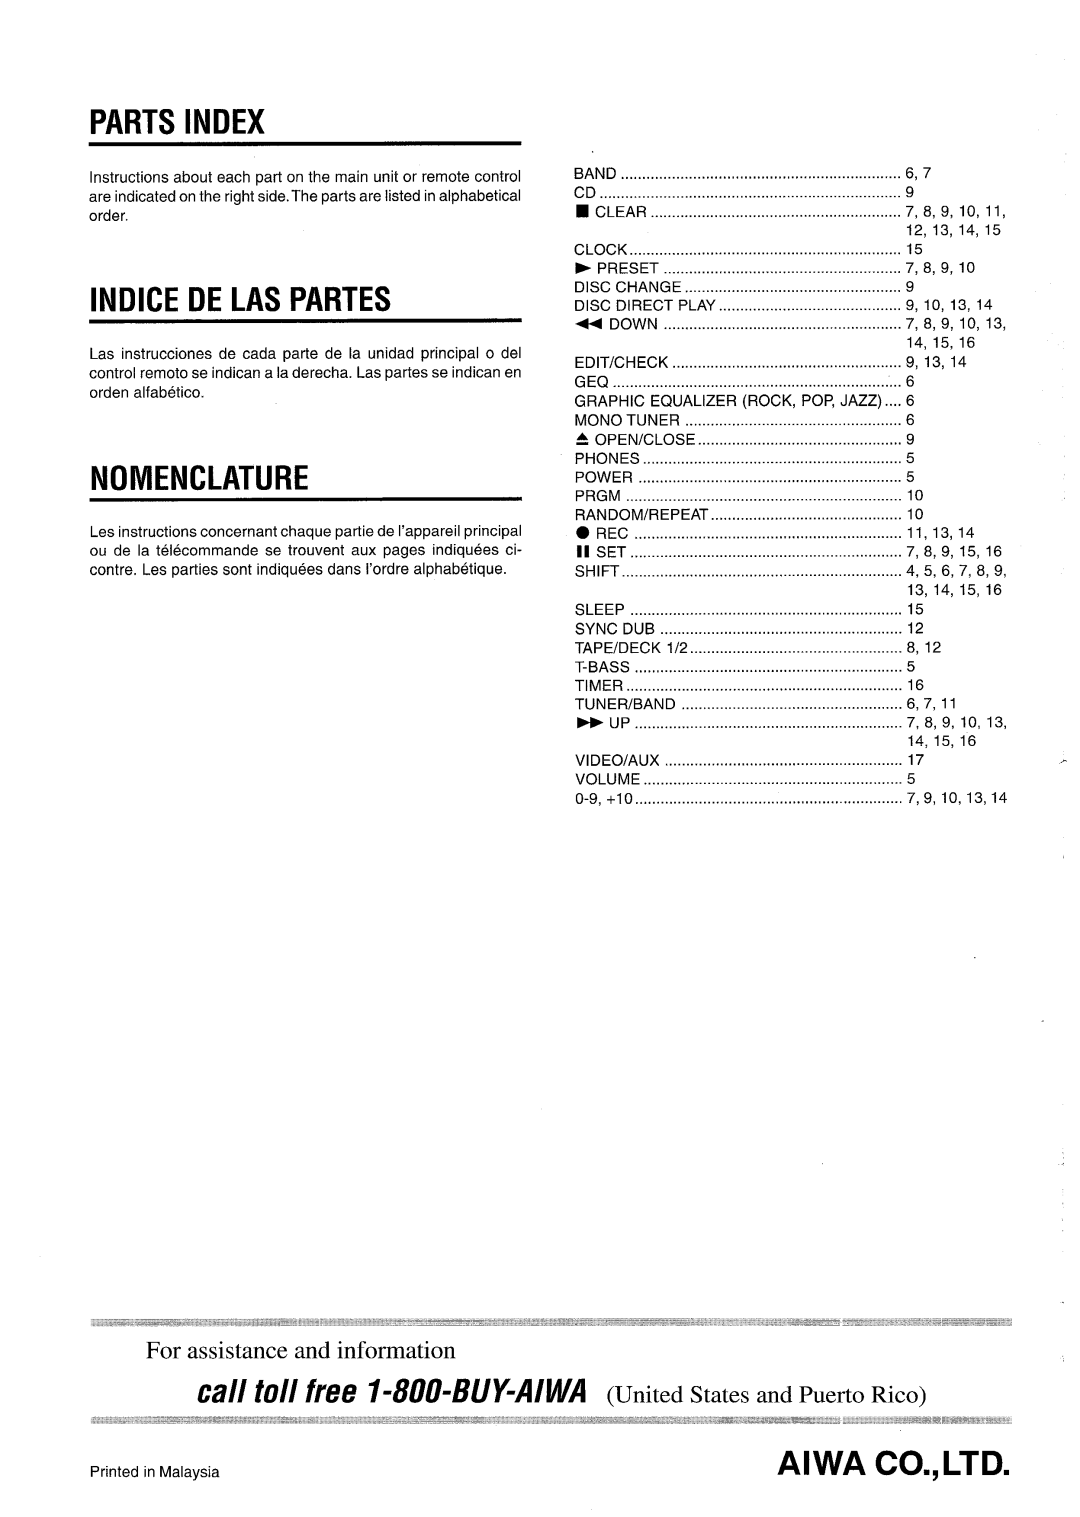 Aiwa CX-NA22 Parts Index, Indice De Las Partes, Nomenclature, Cfl// h7// fh?t?1-80&Buy-A/wA, United States and Puerto Rico 